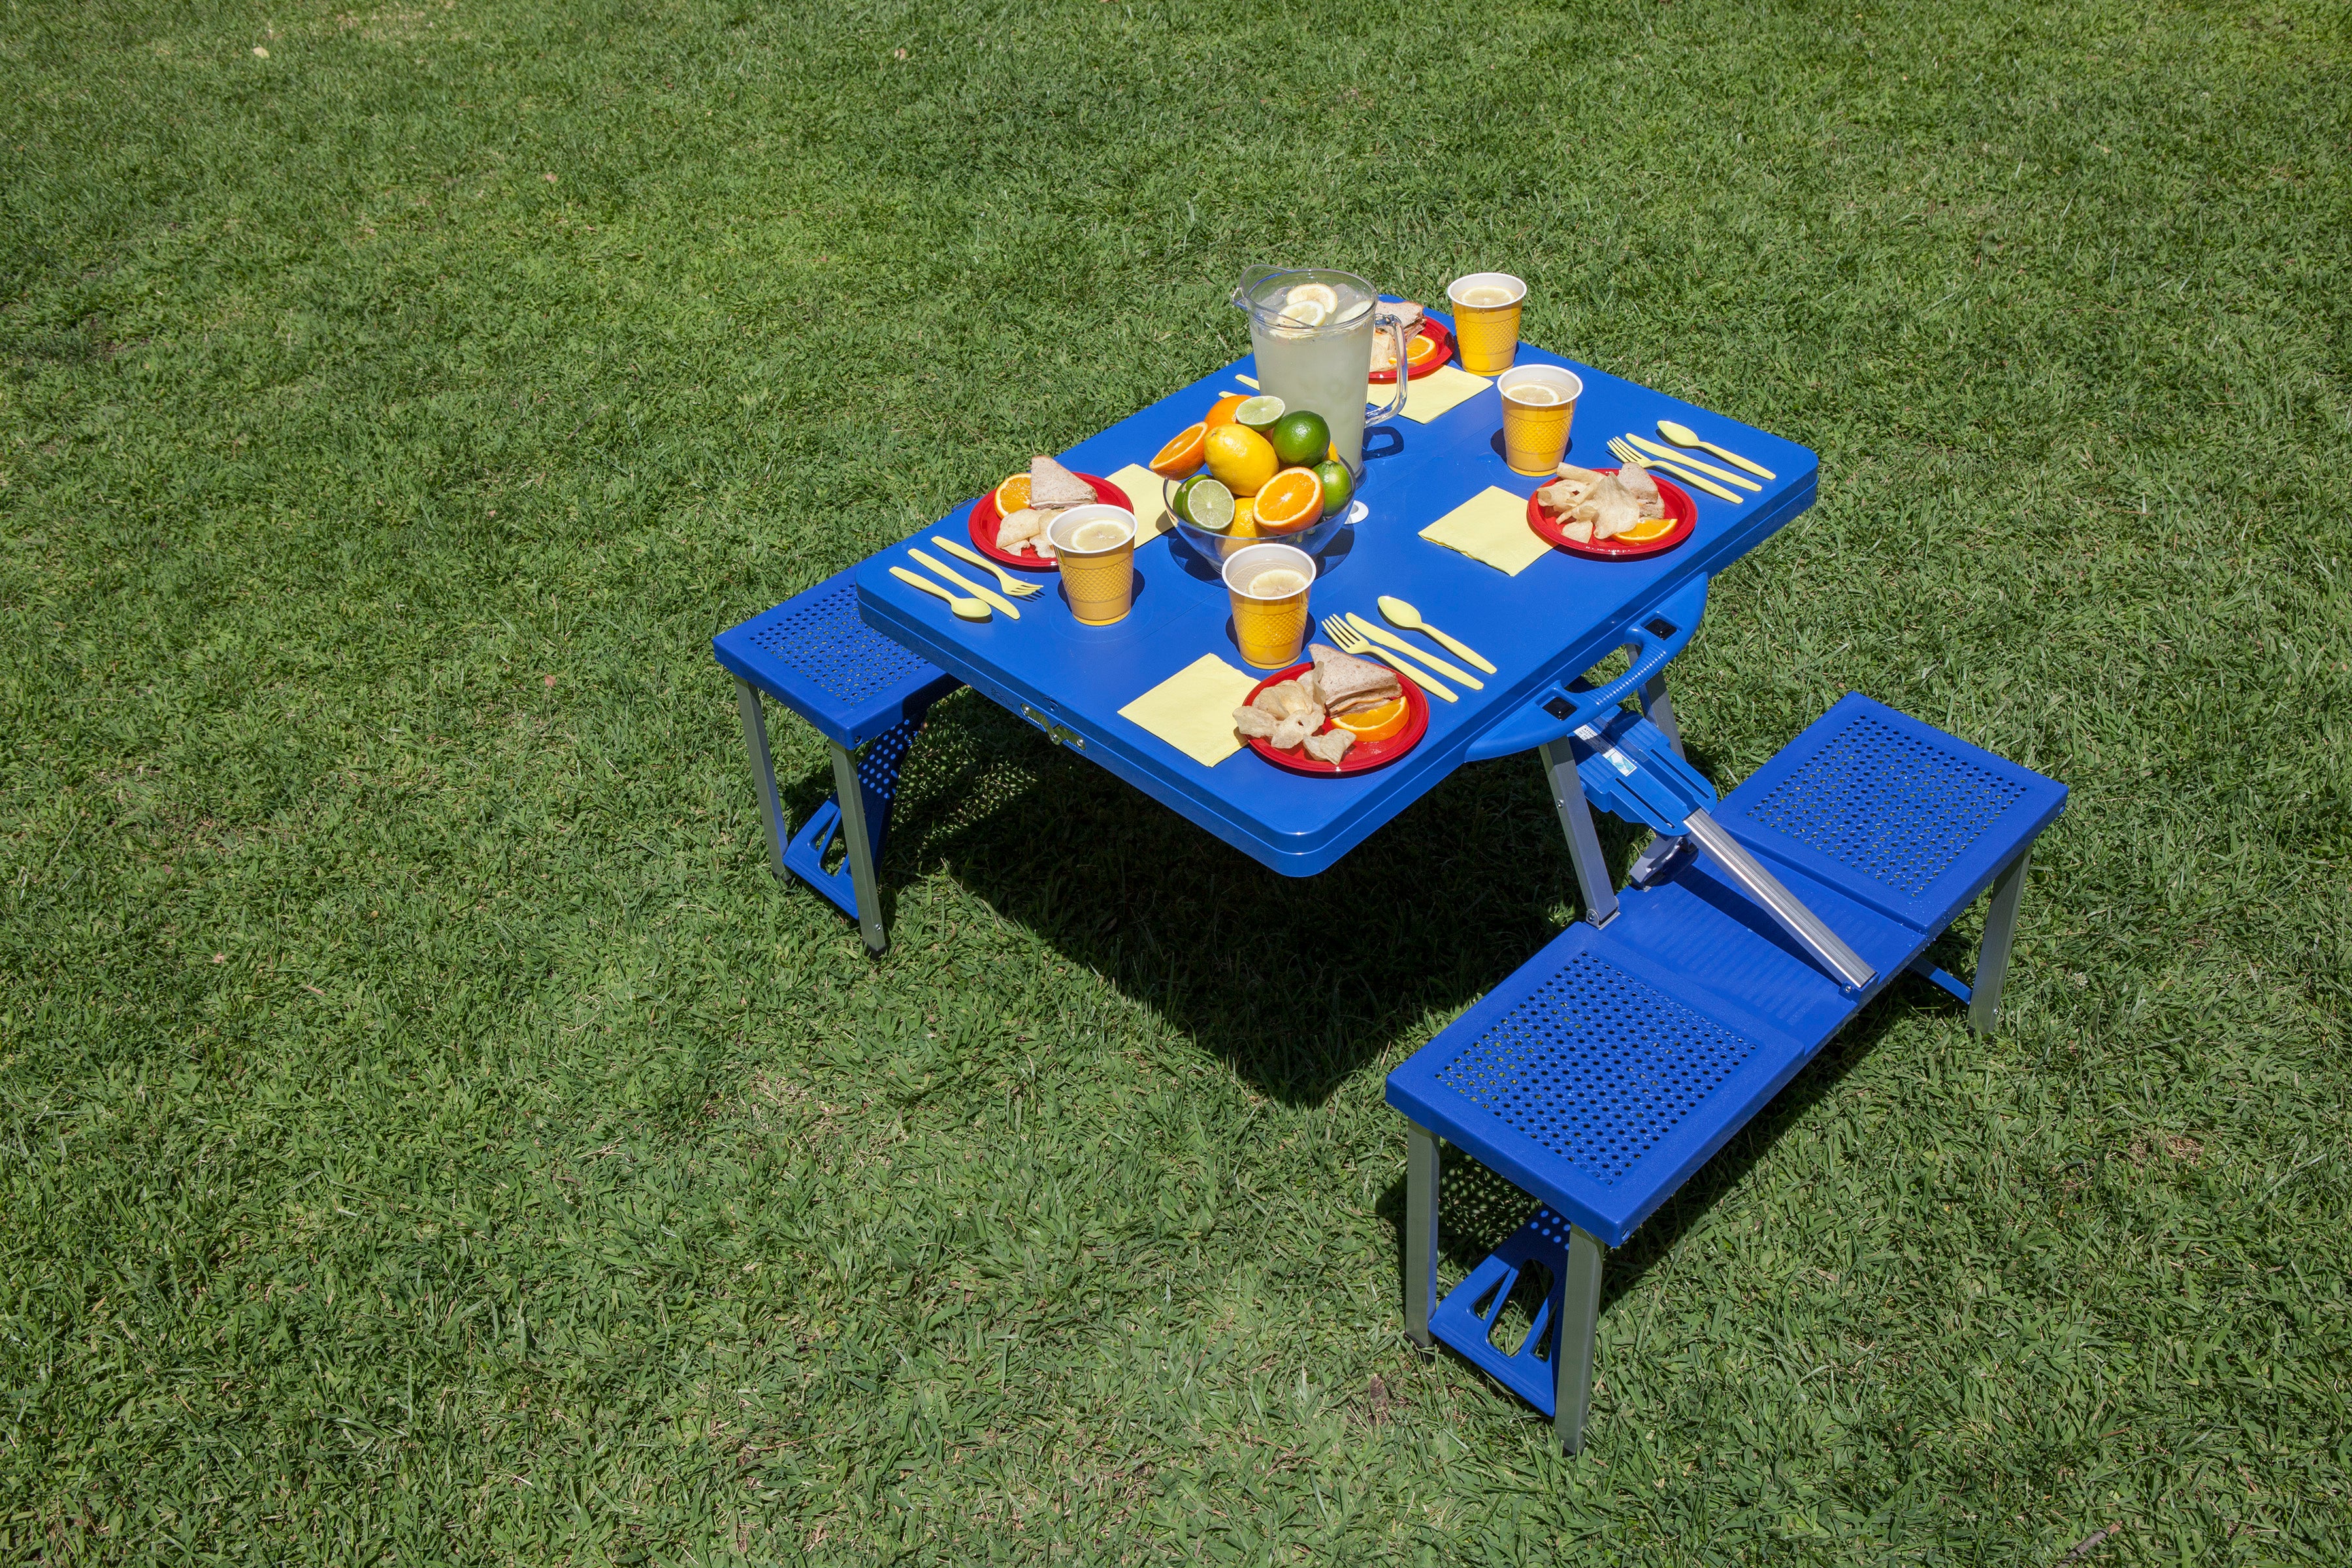 North Carolina Tar Heels Football Field - Picnic Table Portable Folding Table with Seats